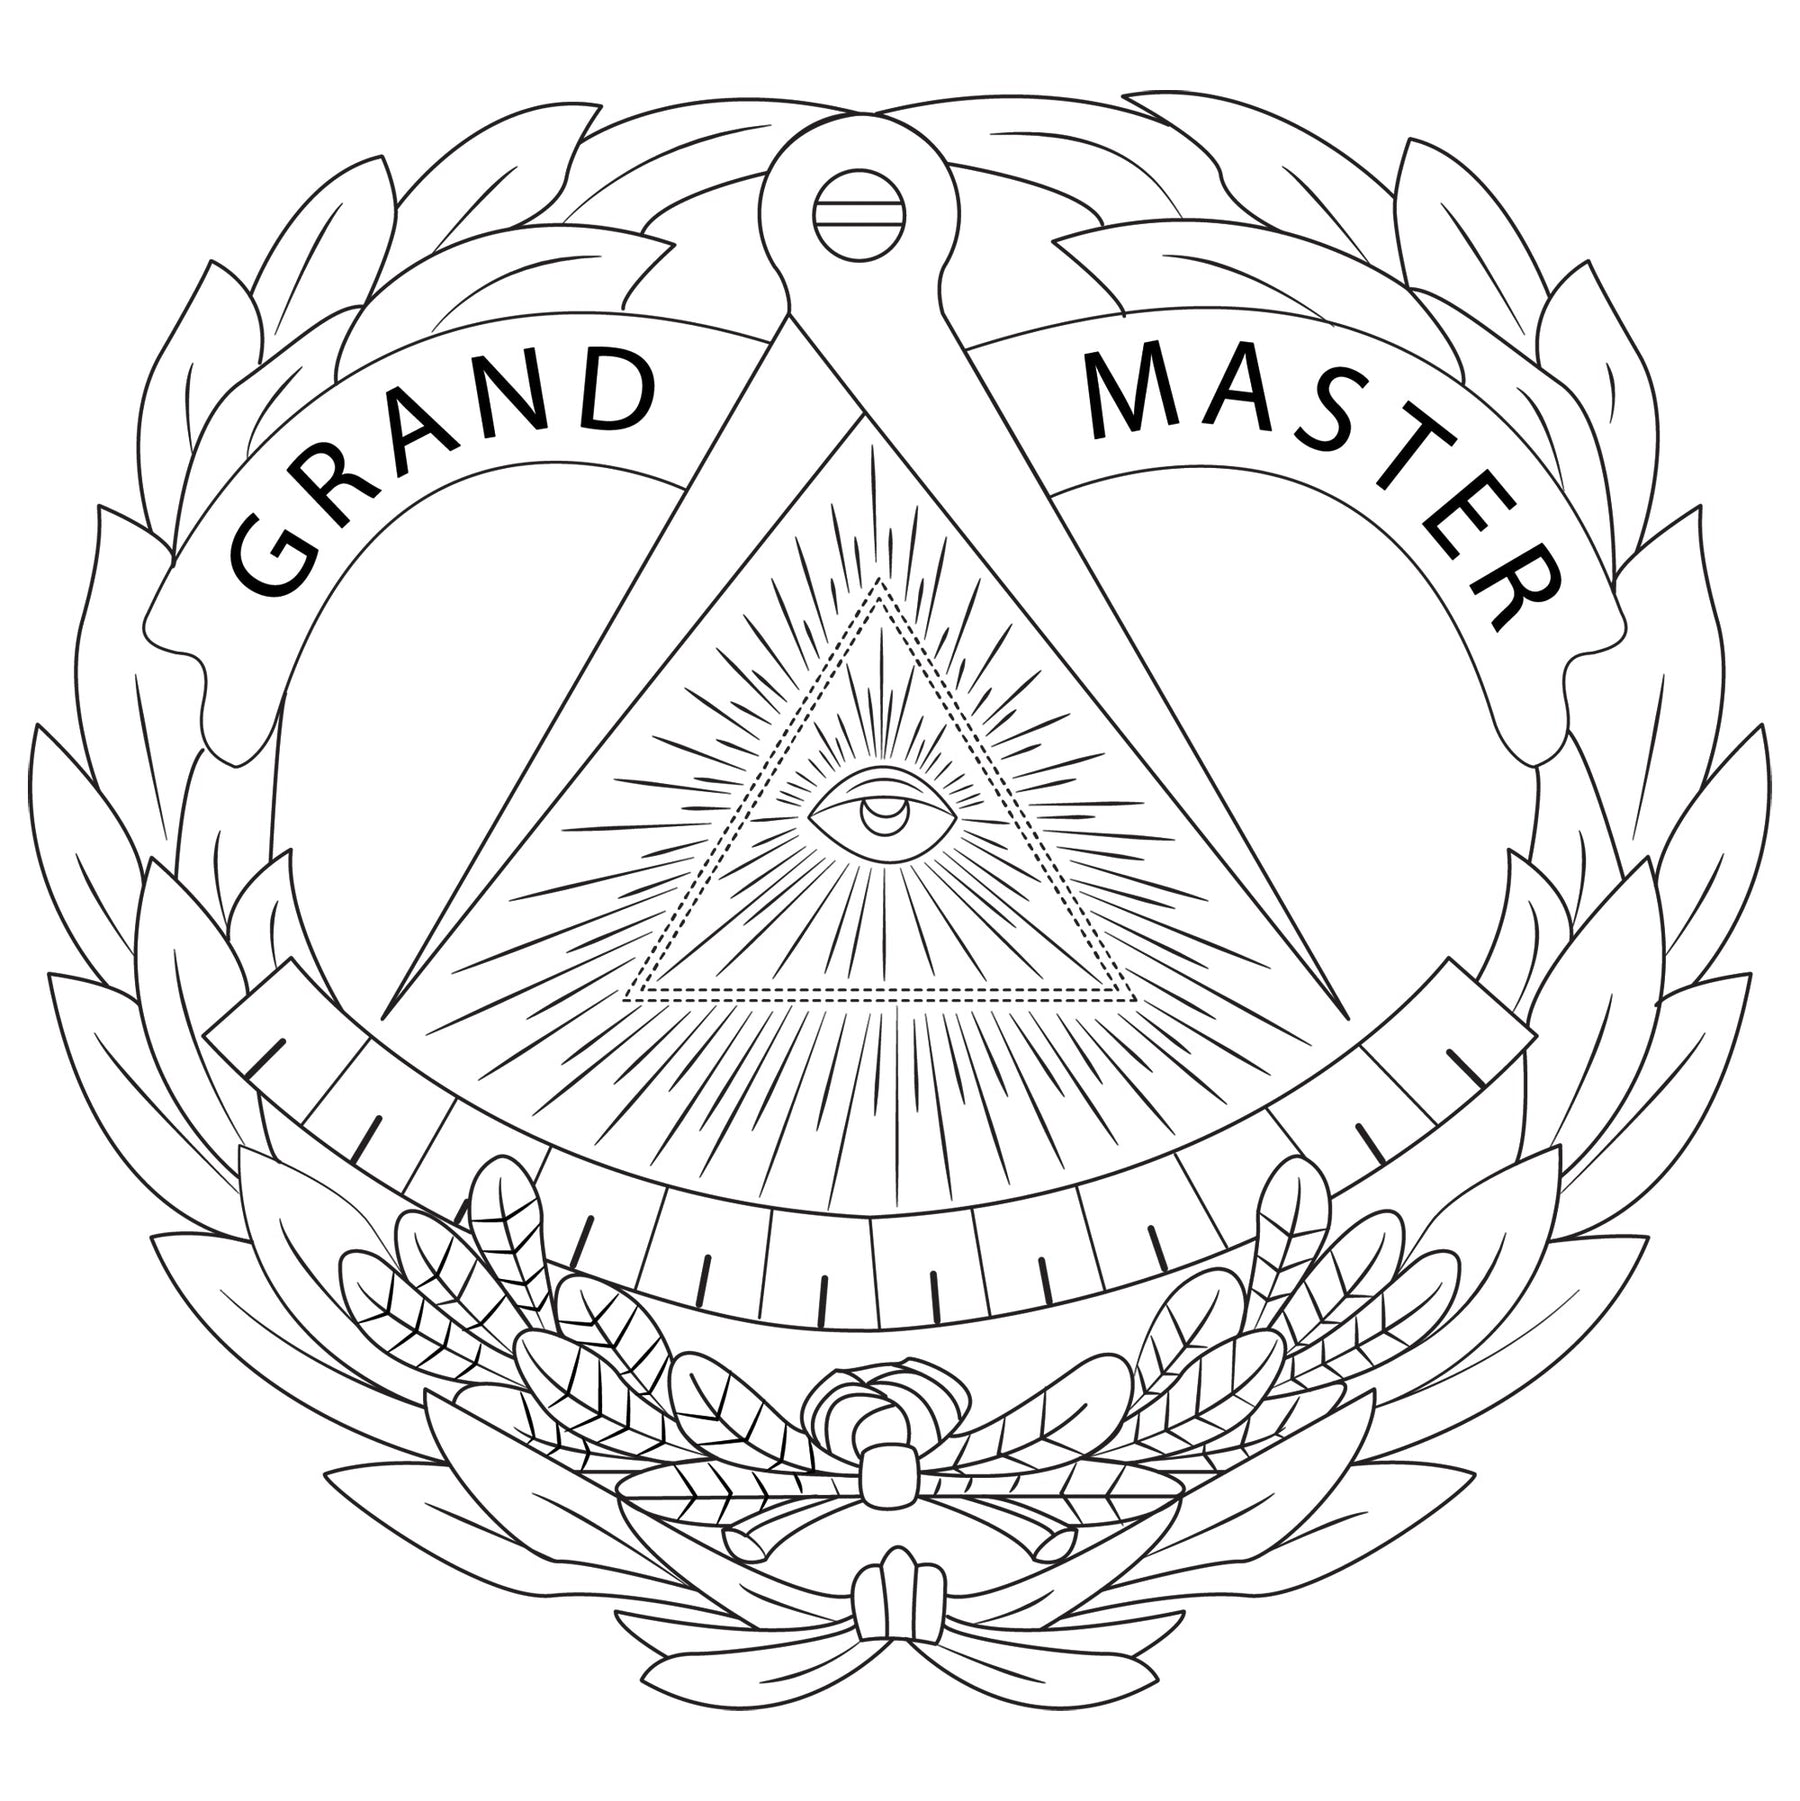 Grand Master Blue Lodge Wax Seal Stamp - Various Sizes - Bricks Masons